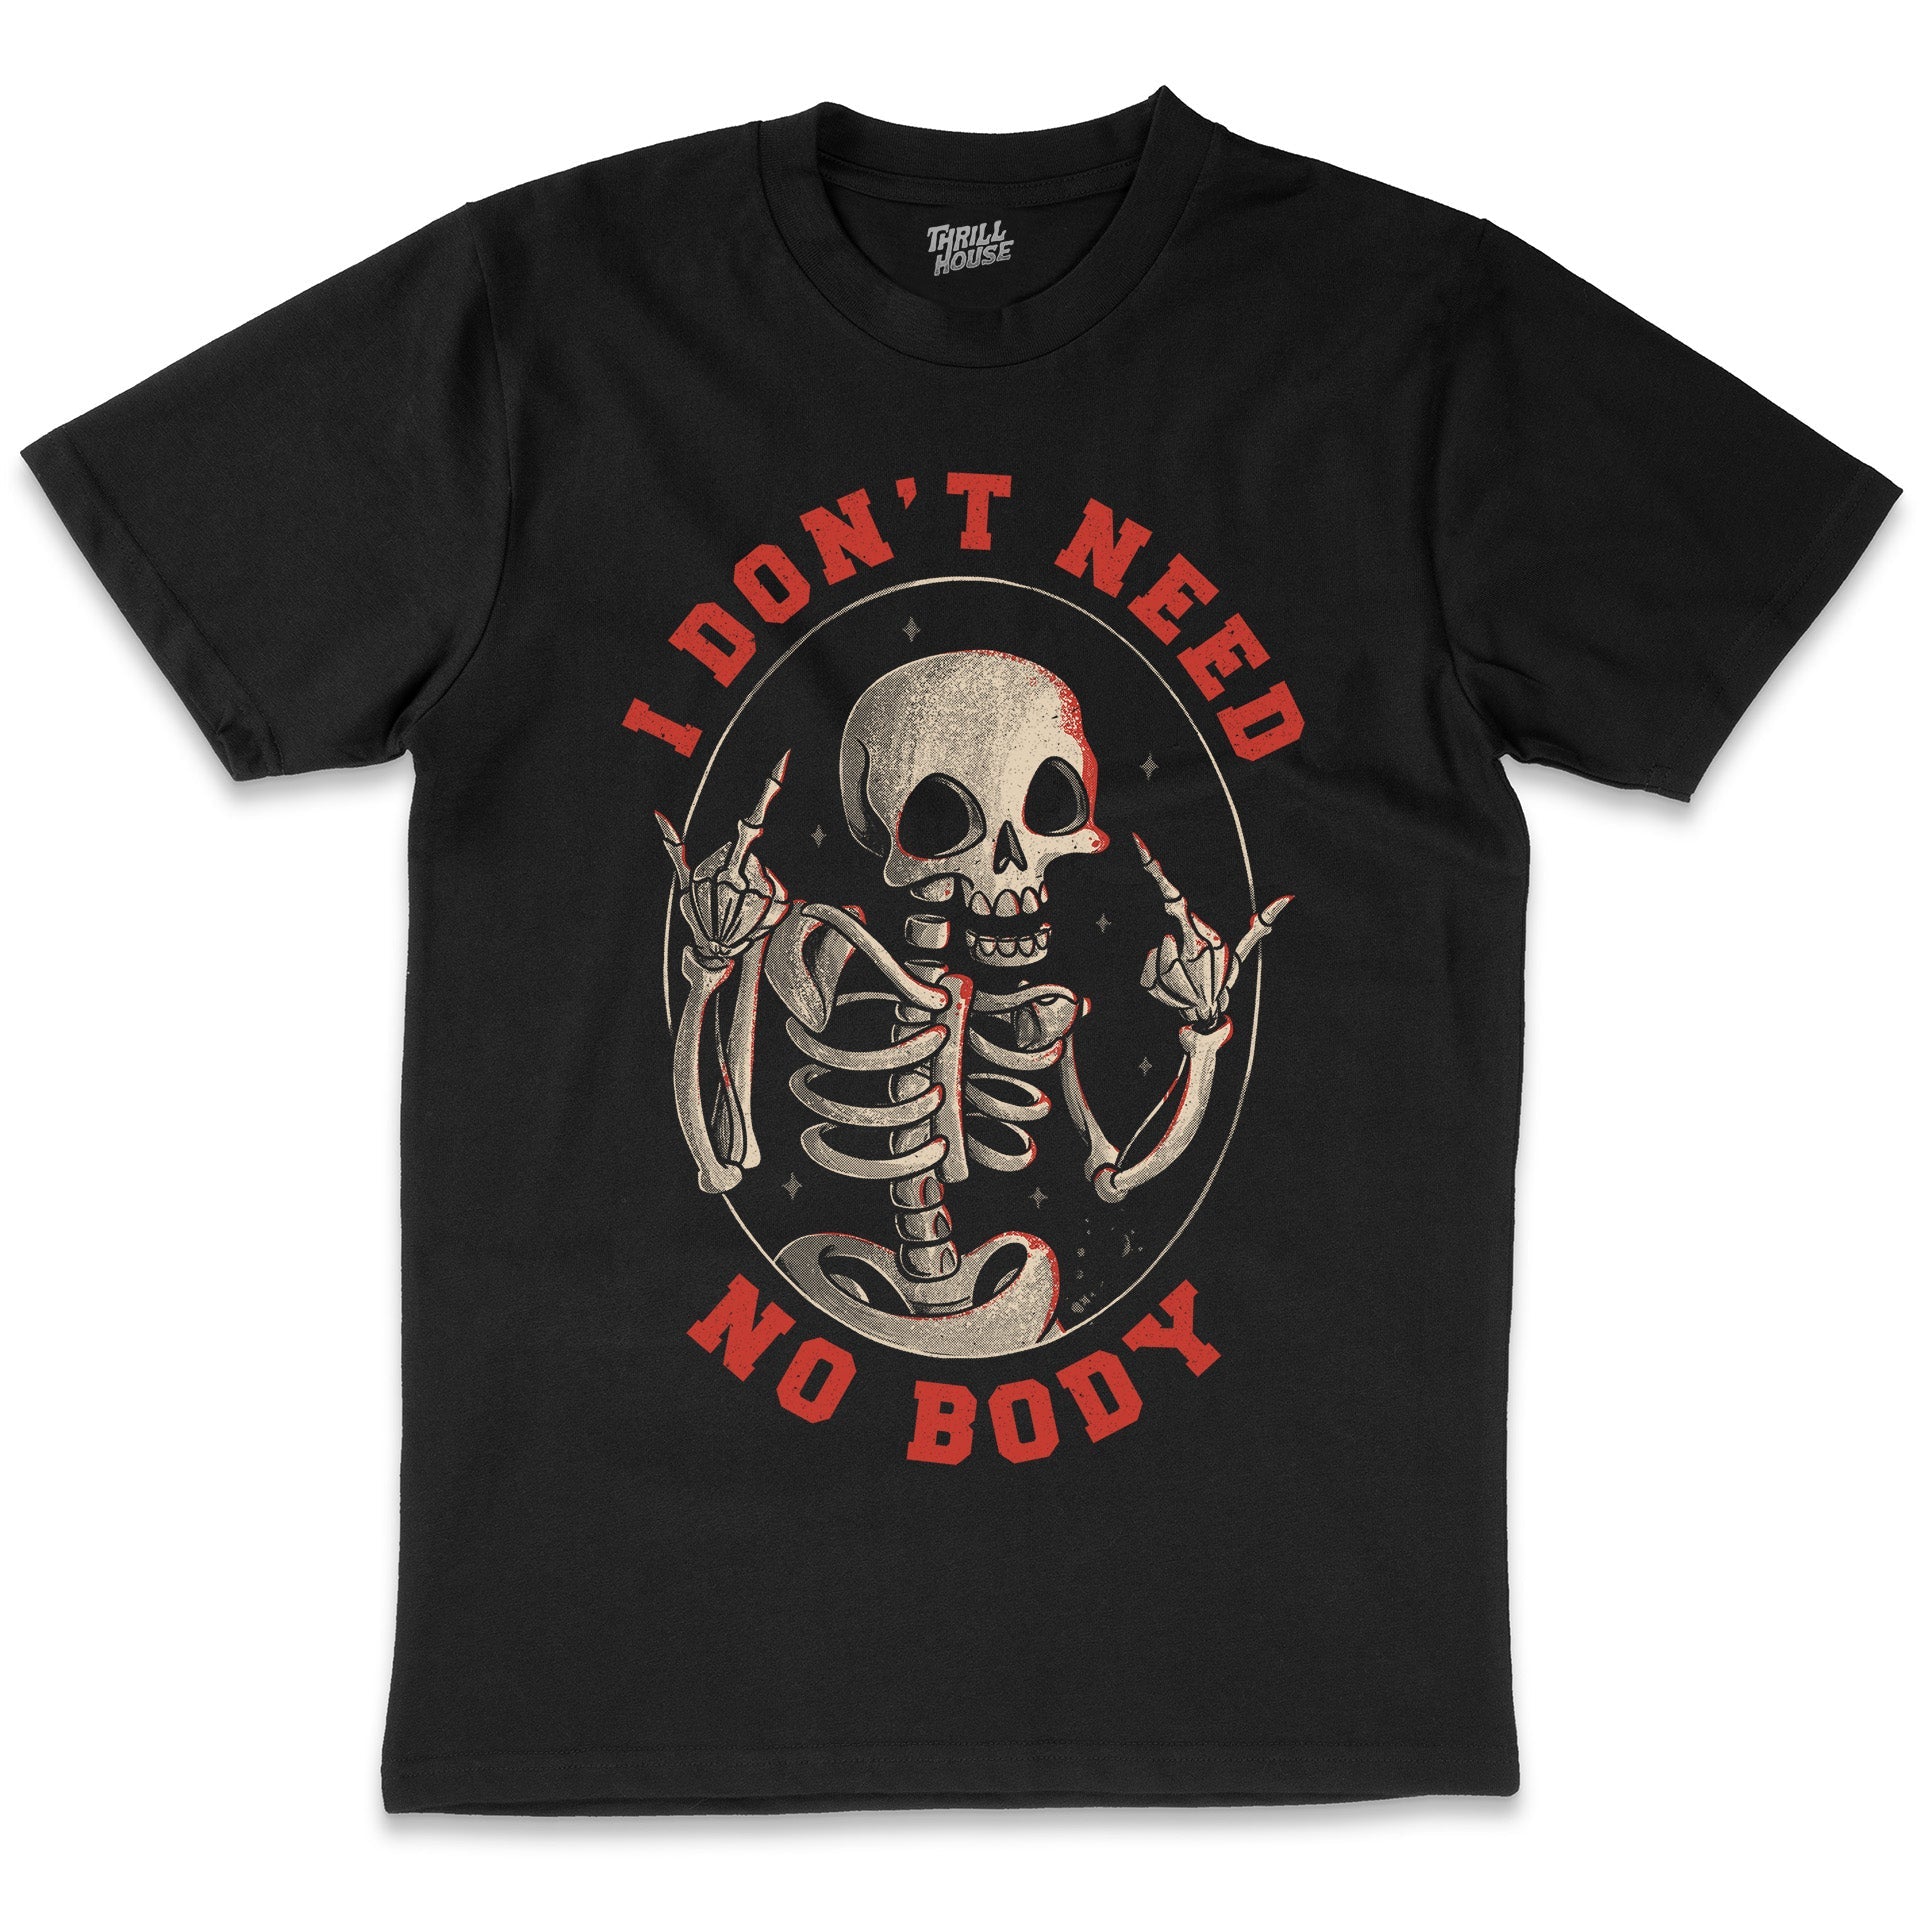 I Don't Need No Body Skeleton Funny Pun Dark Humour Macabre Cotton T-Shirt